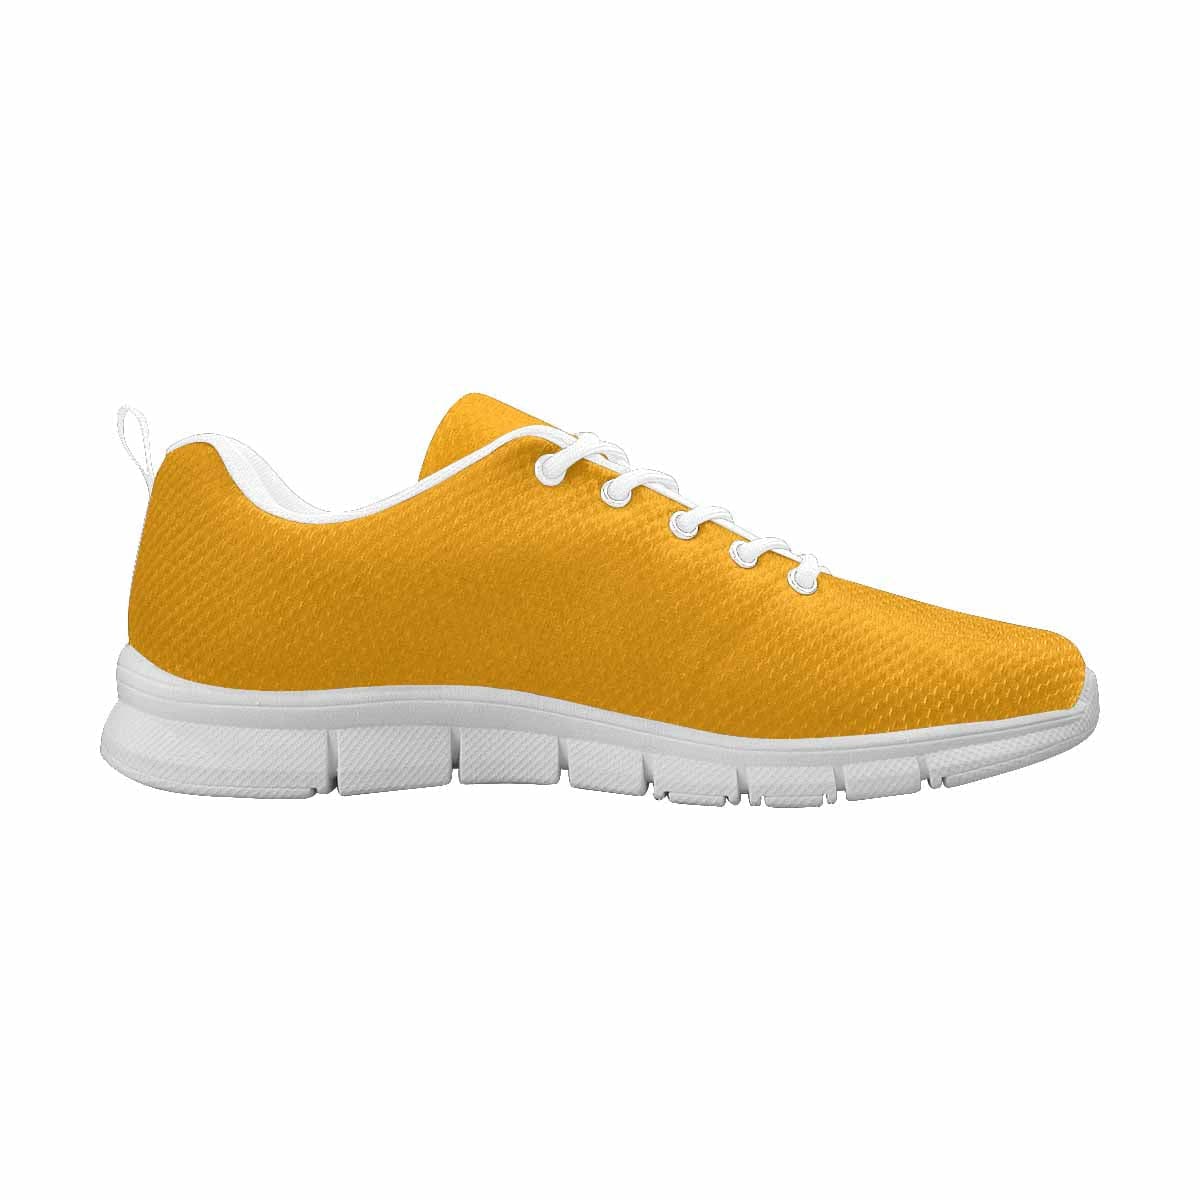 Sneakers For Men Bright Orange - Running Shoes - Mens | Sneakers | Running